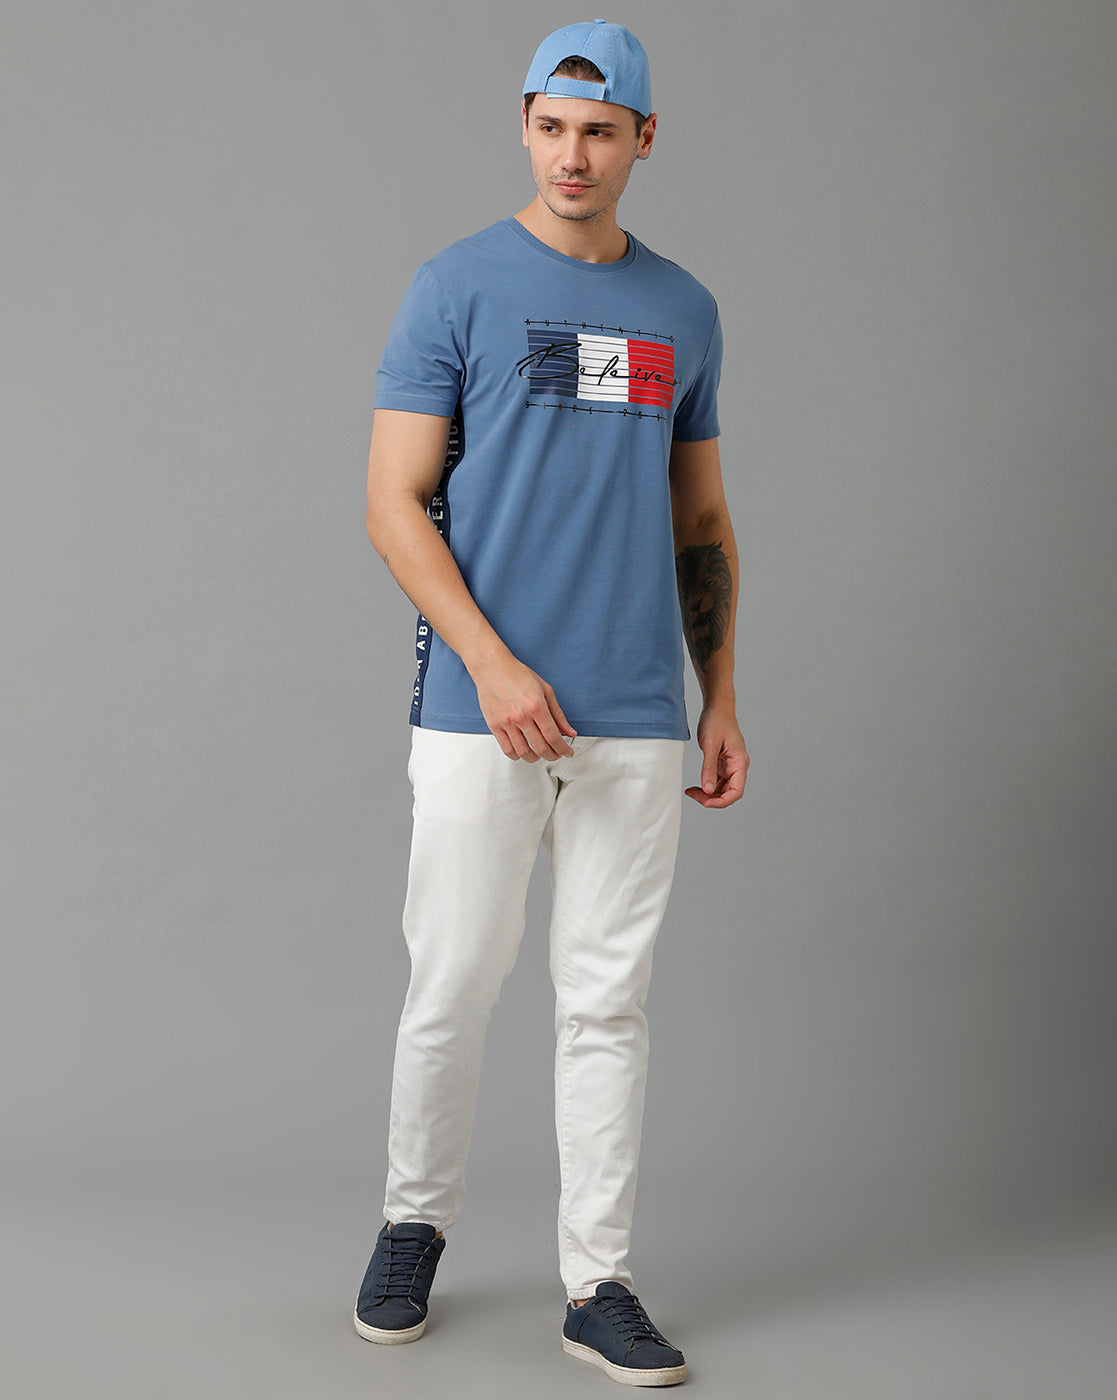 CP BRO Men's Cotton Half Sleeve Printed Slim Fit Round Neck Blue Color T-Shirt | Brcn - 518 B